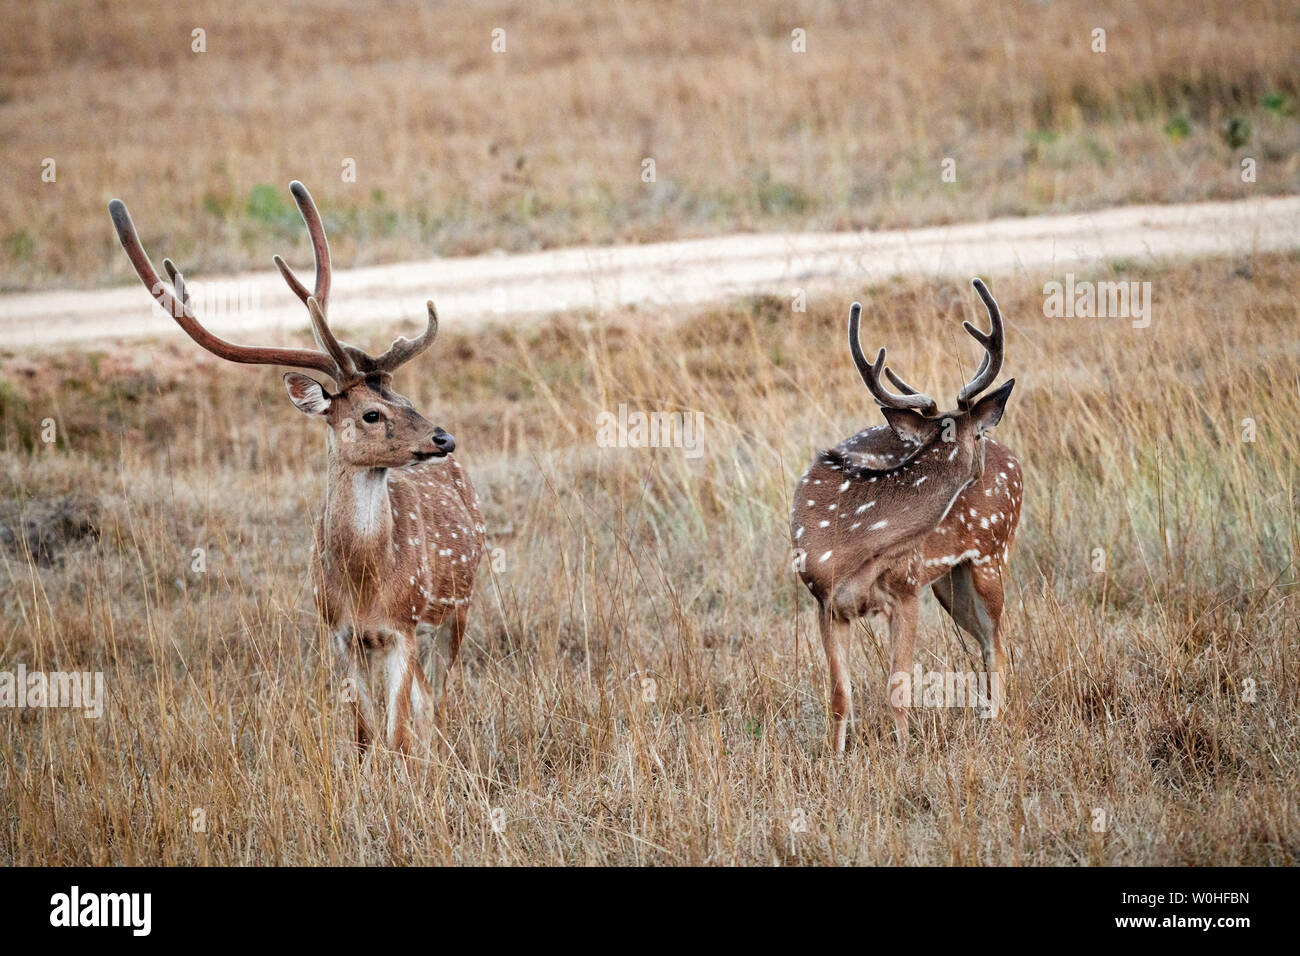 Deux cerfs tachetés ou axis, Axis axis, Bandipur Tiger Reserve, Karnataka, Inde Banque D'Images